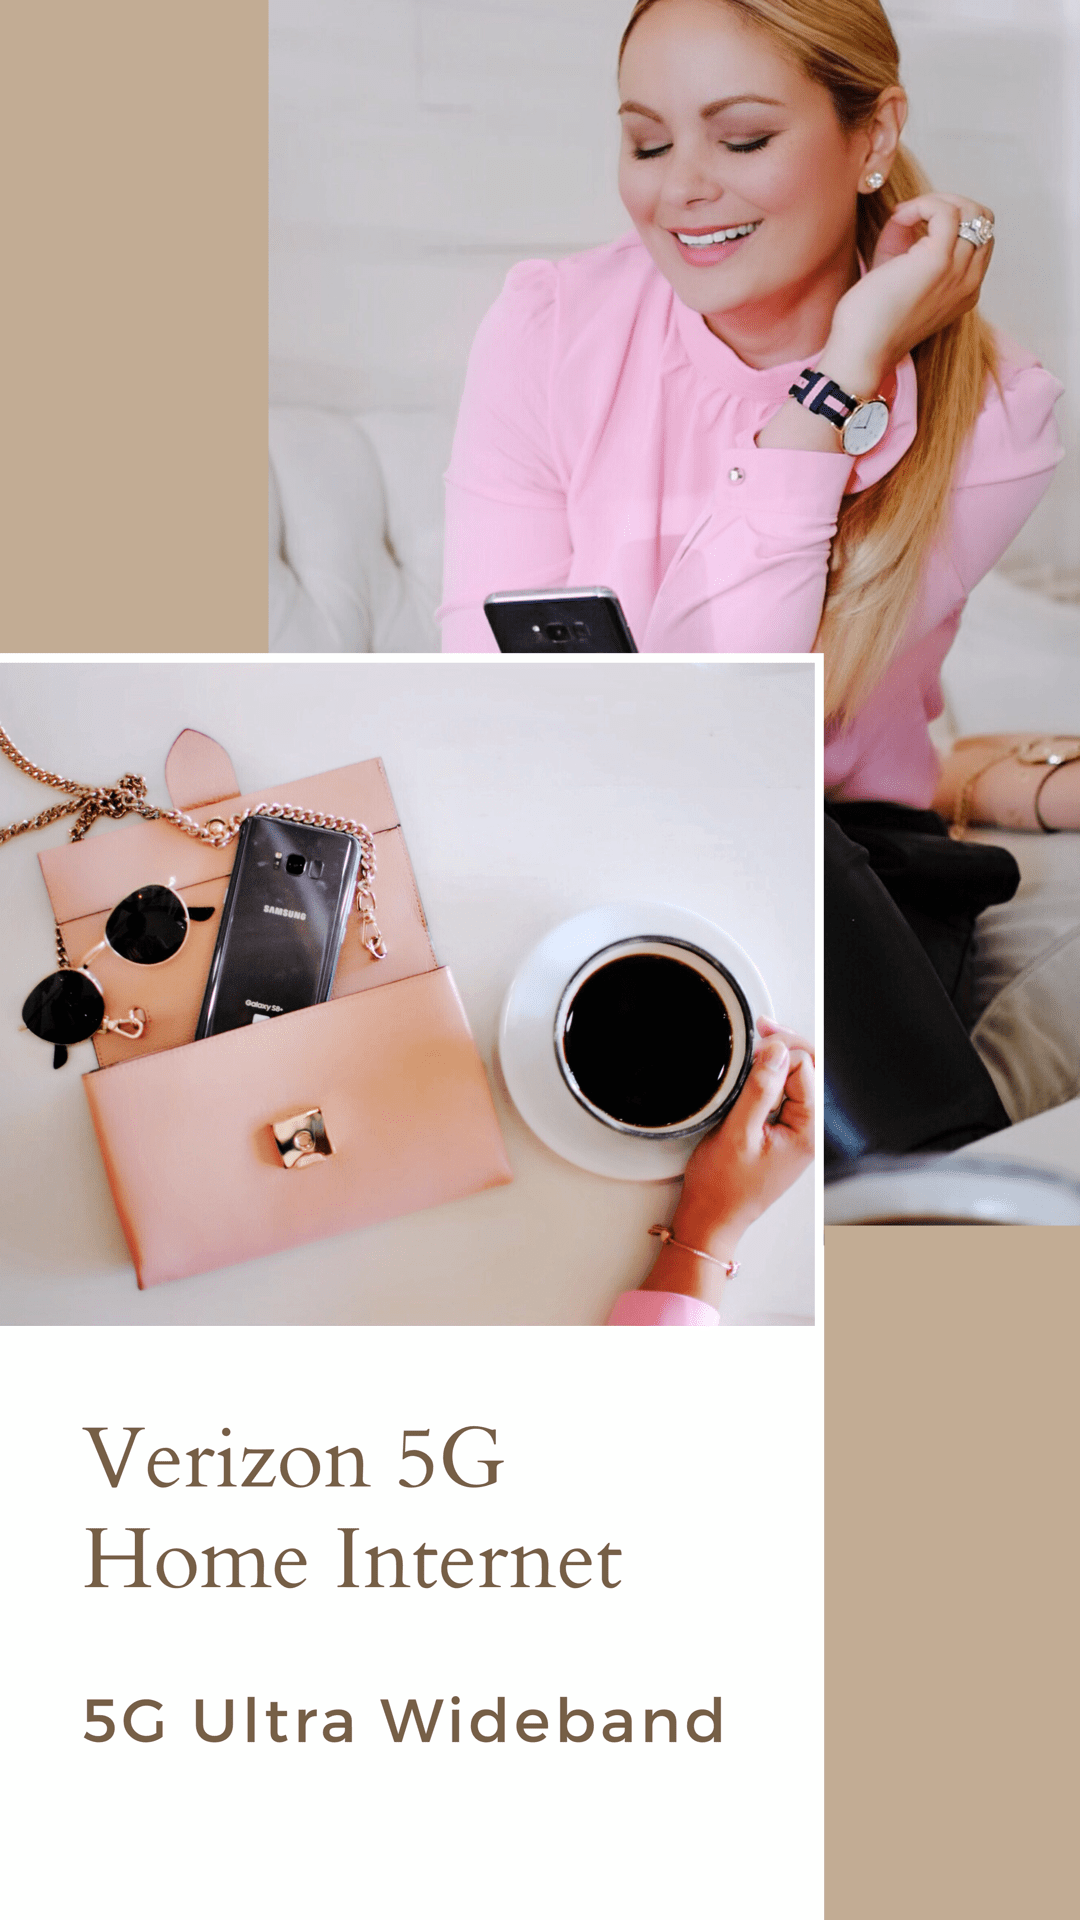 Verizon-5G-Home-Internet-Vanessa-Lambert-Blog-WhatWouldVWear